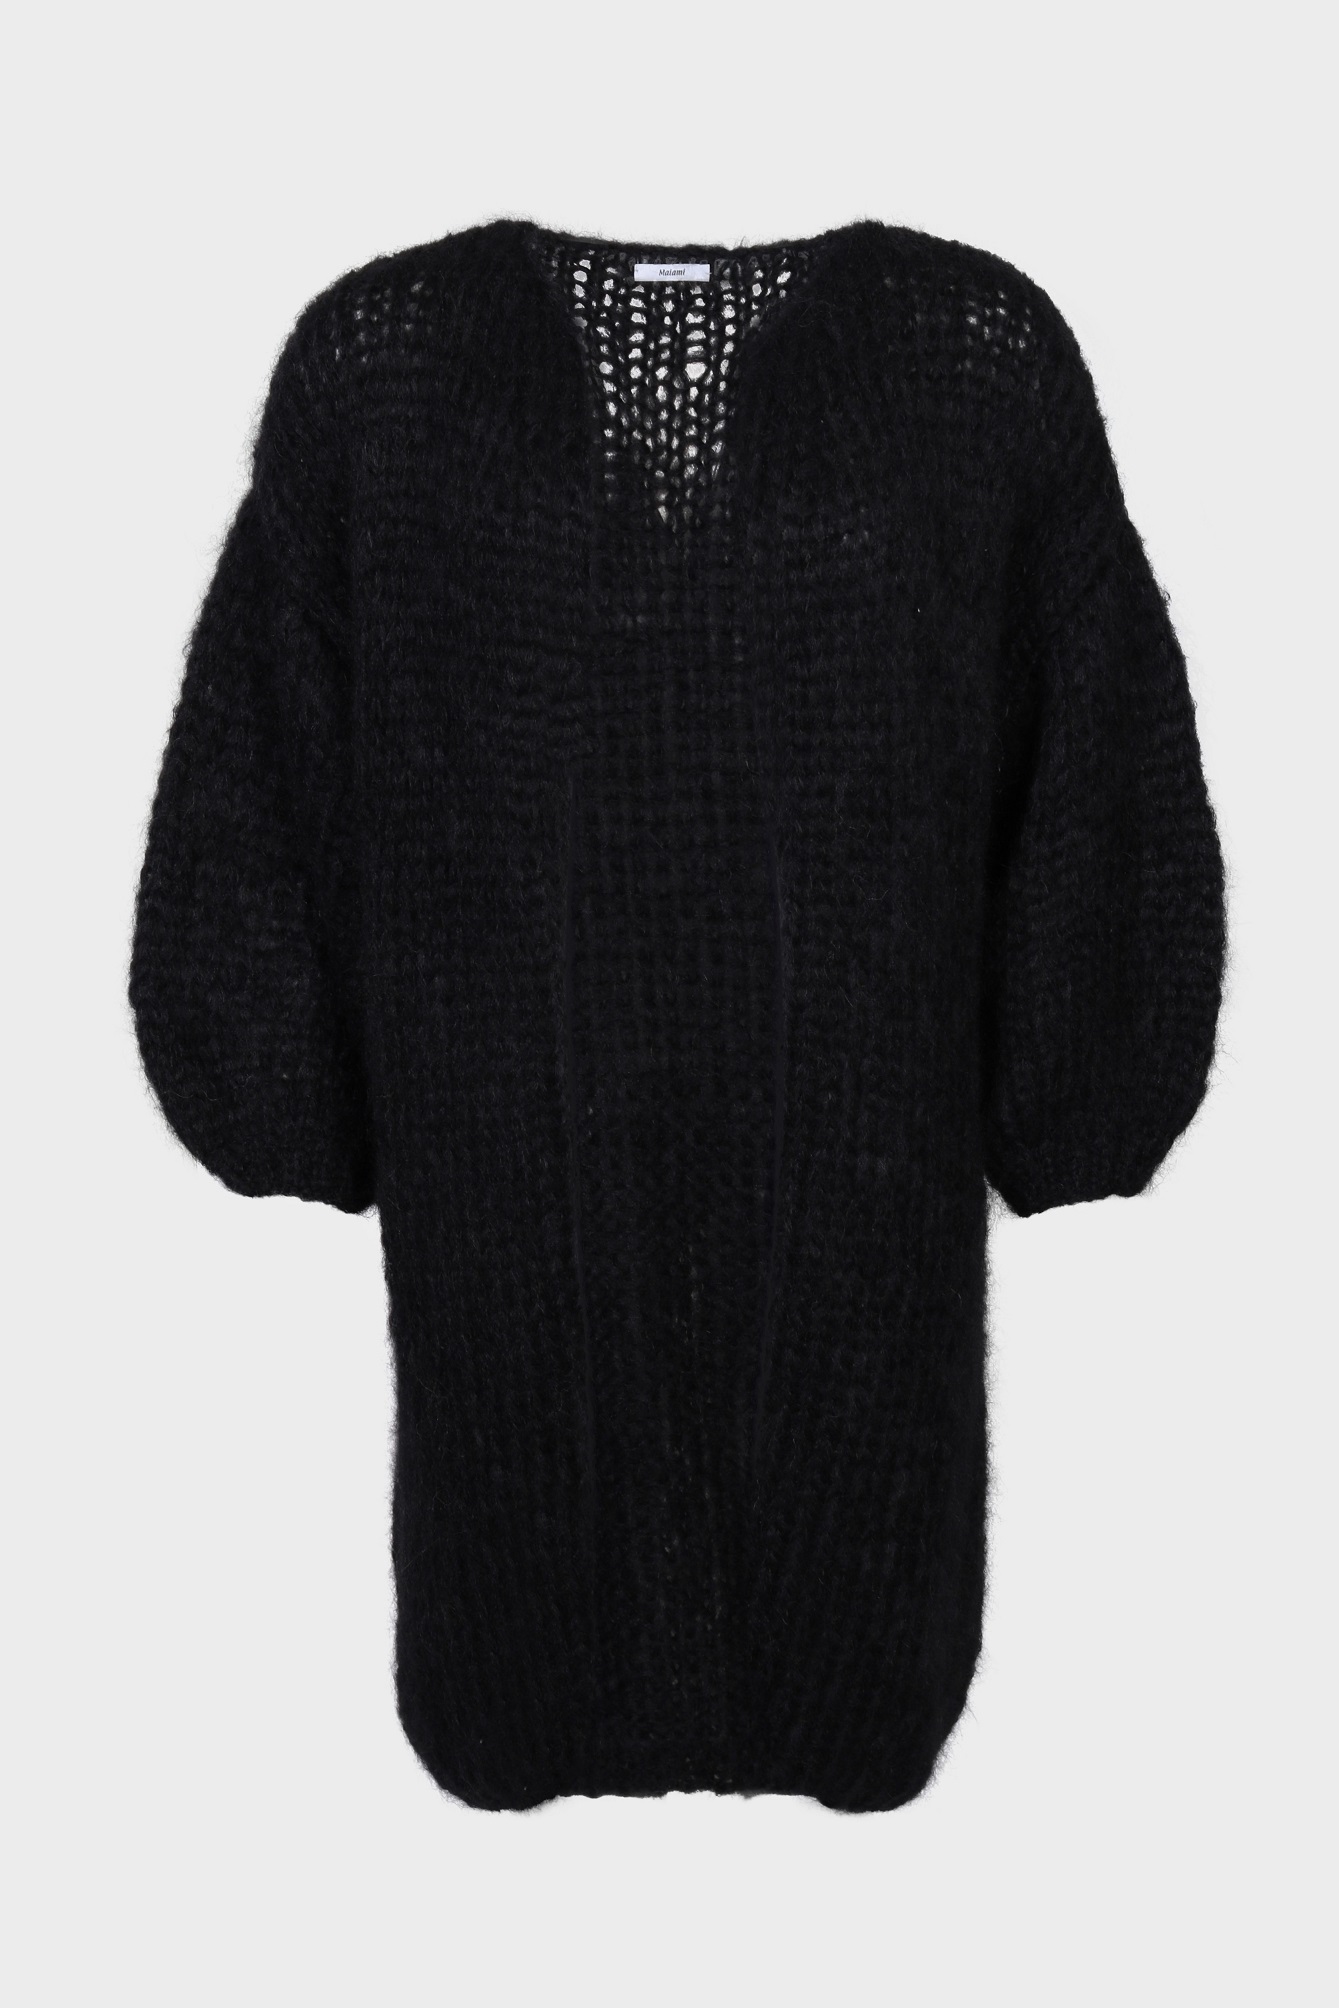 MAIAMI Short Knit Coat in Black